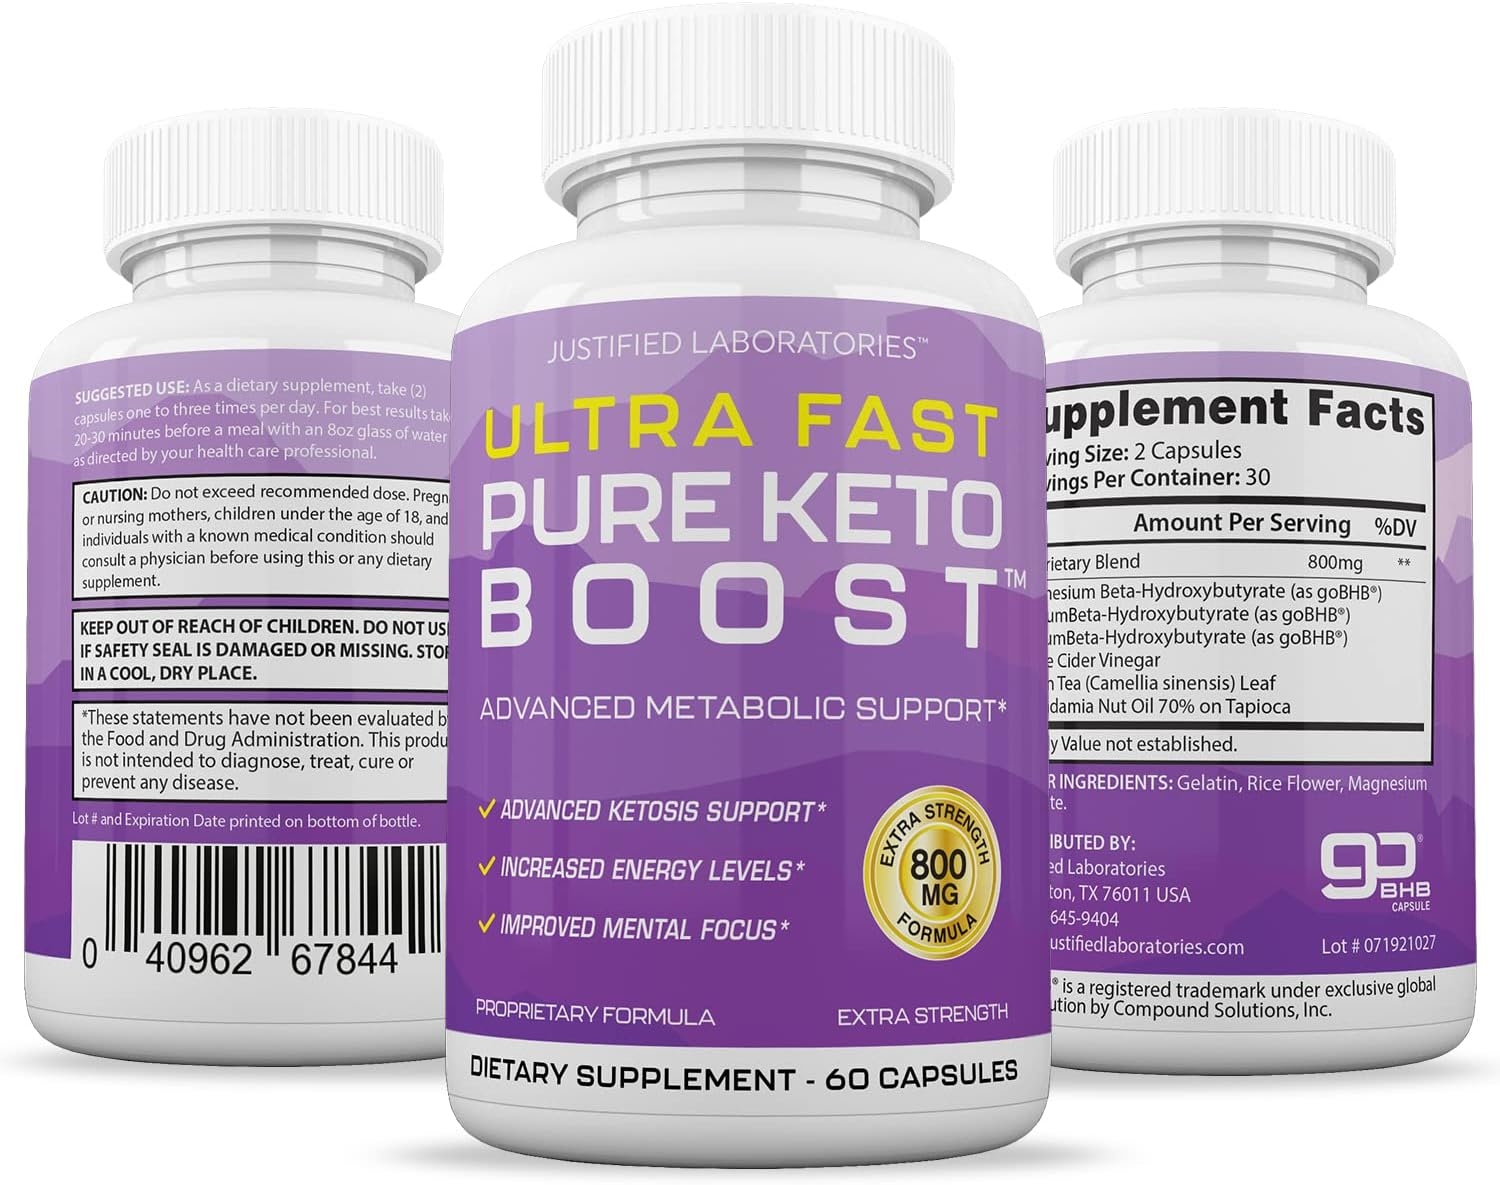 Ultra Fast Pure Keto Boost Pills Advanced BHB Ketogenic Supplement Exogenous Ketones Ketosis Support for Men Women 60 Capsules 1 Bottle